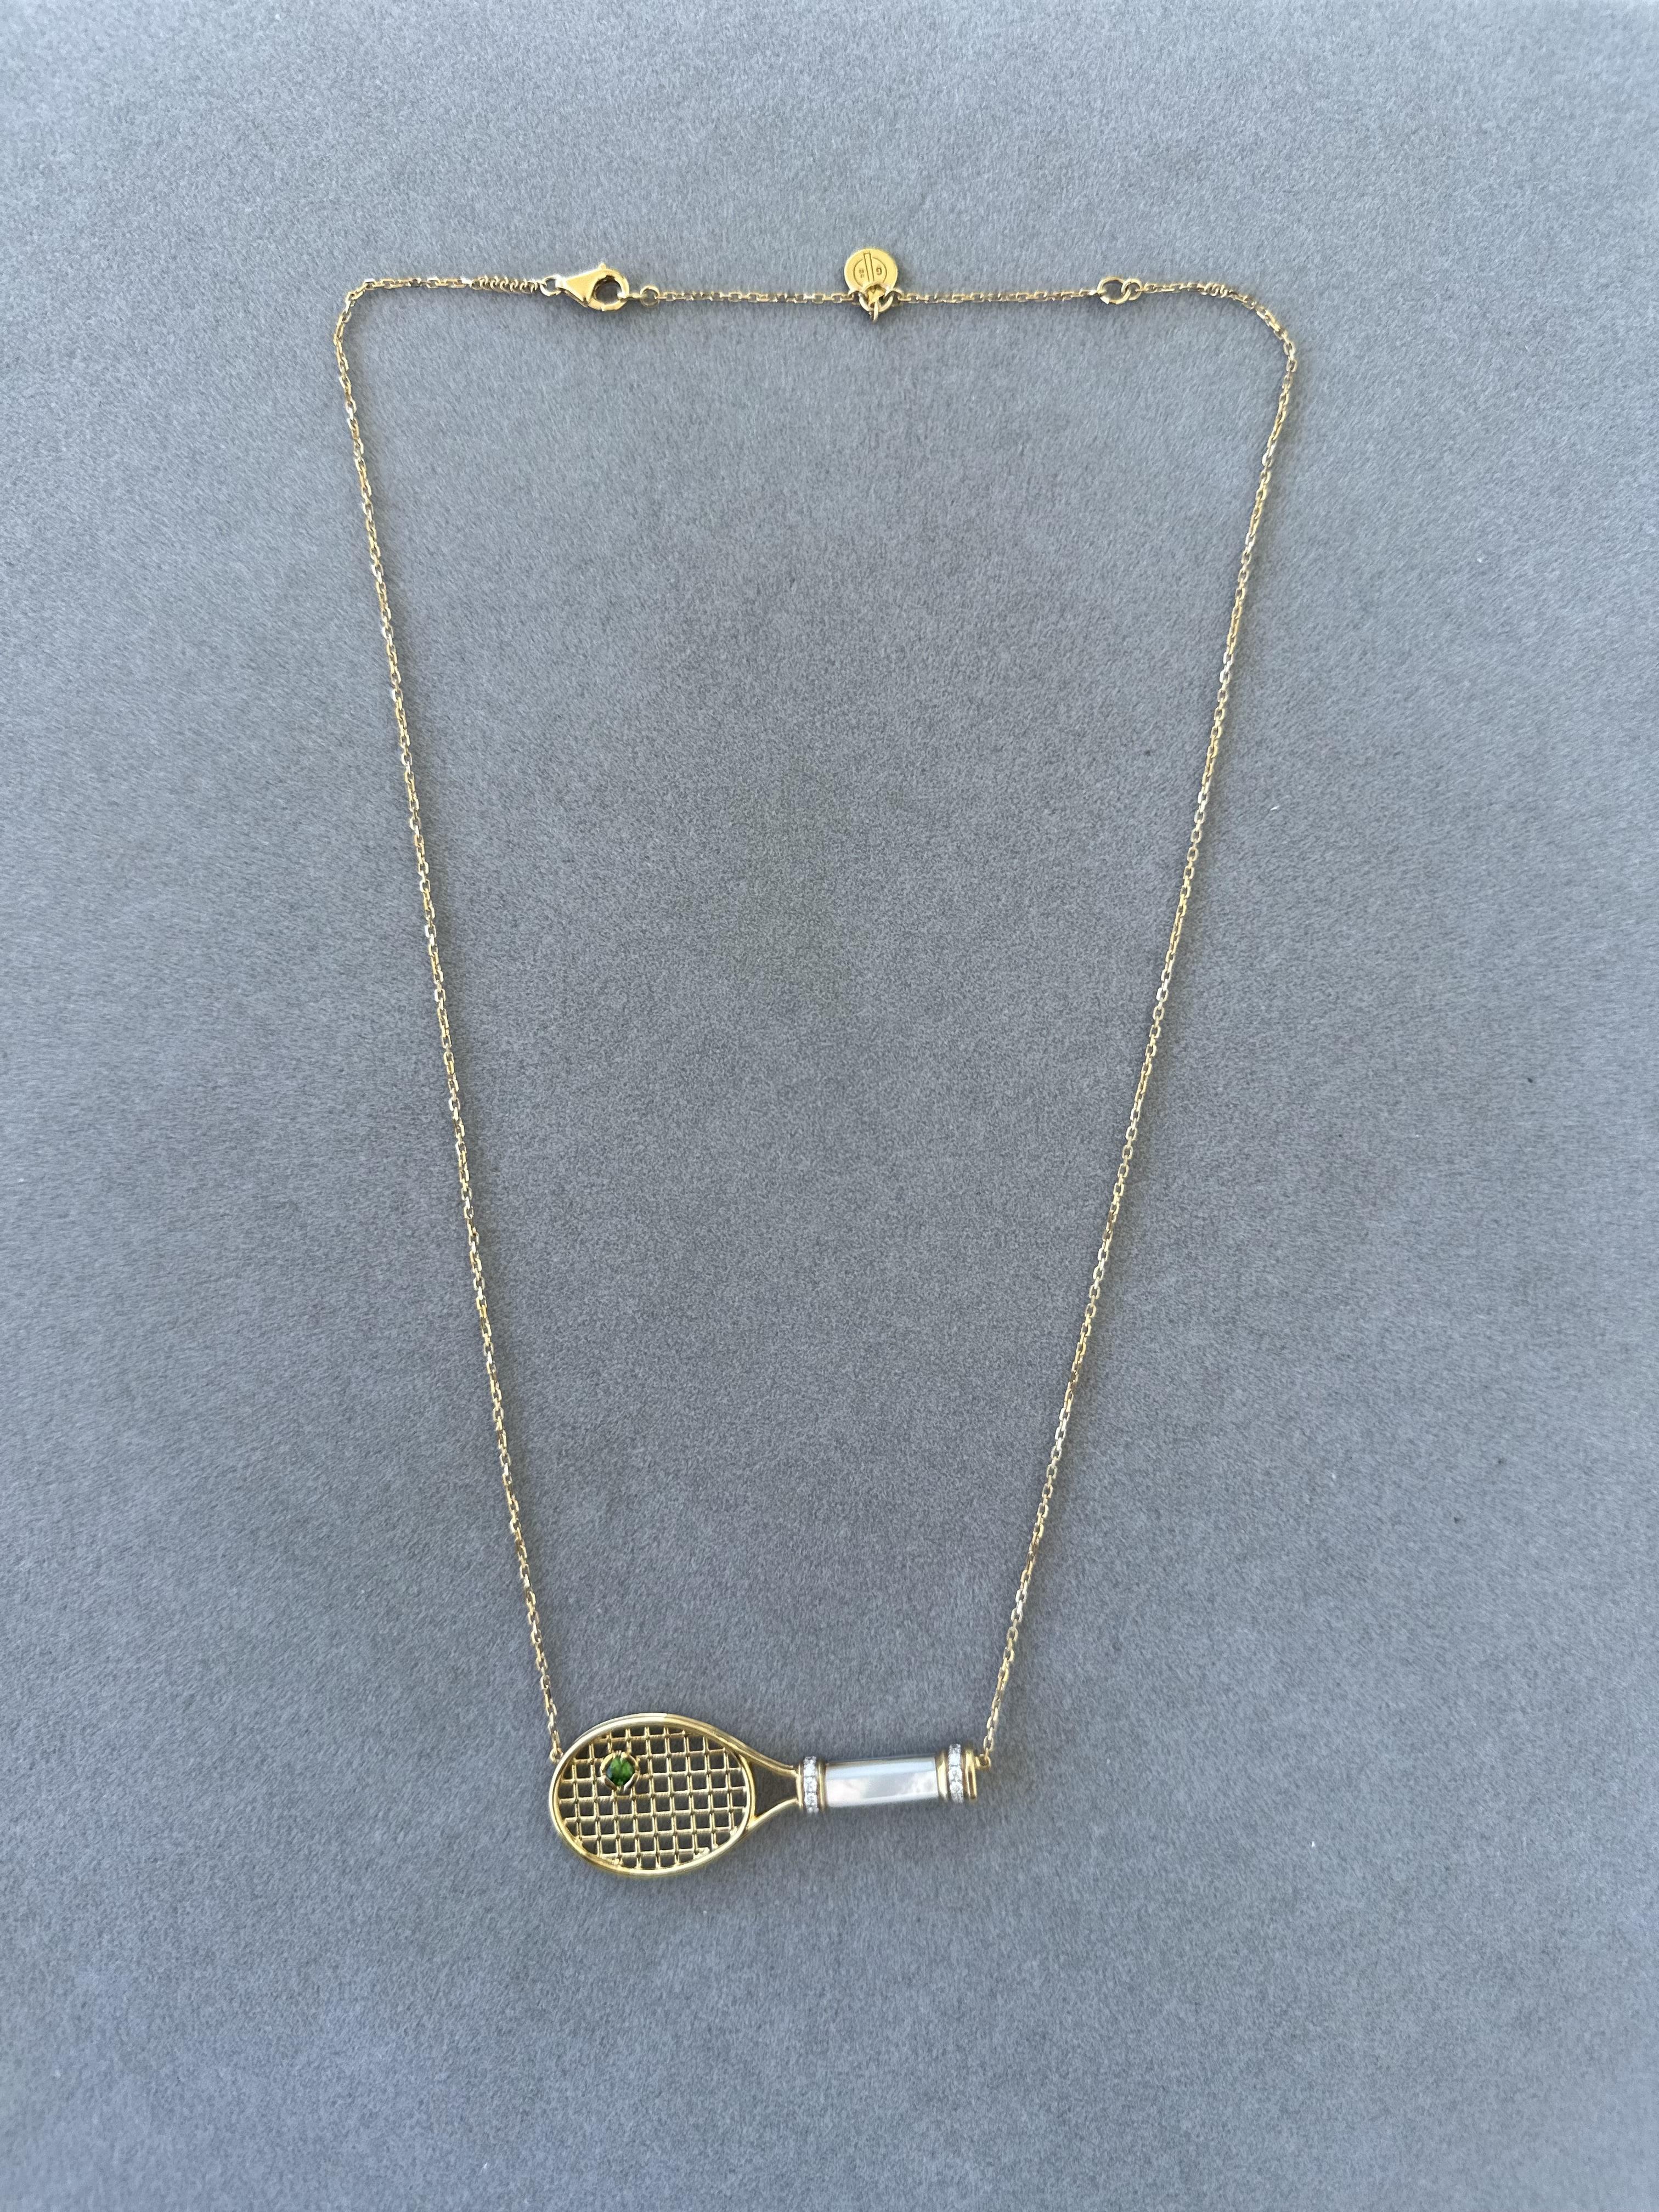 Diamond White Pearl Emerald 18 Karat Gold Tennis Racket Charm Pendant Necklace For Sale 1